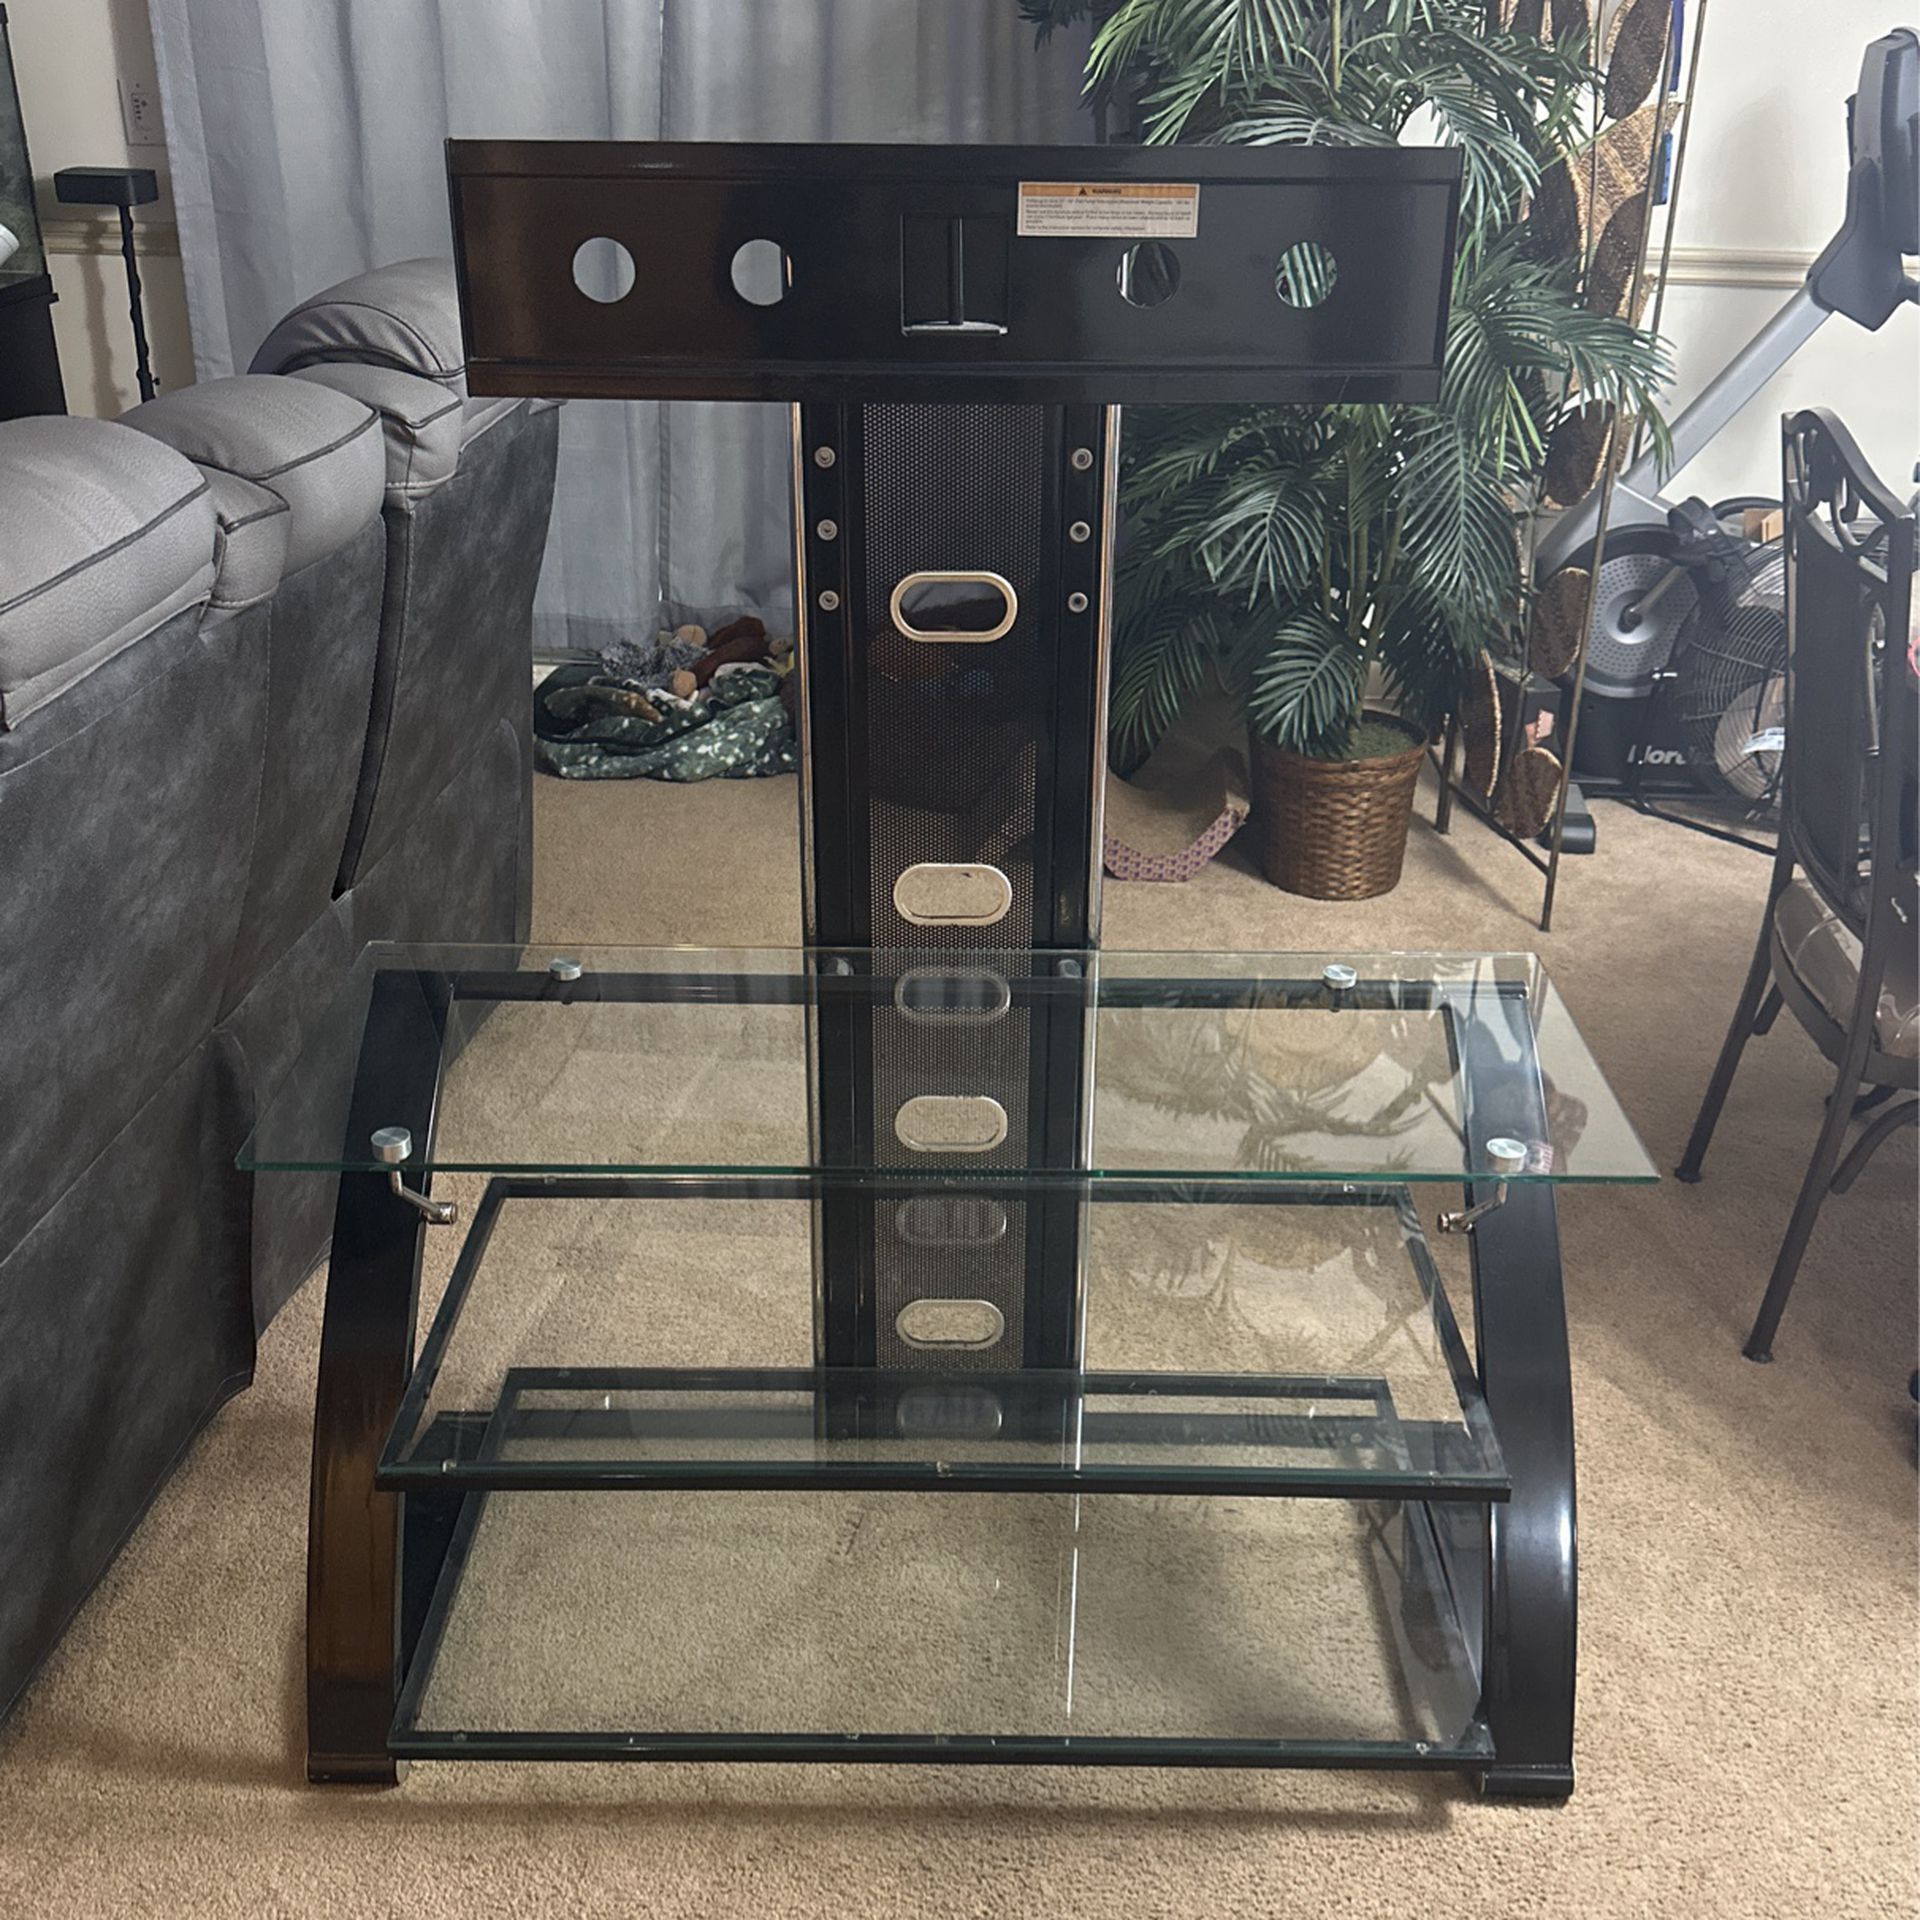 Glass TV Stand 